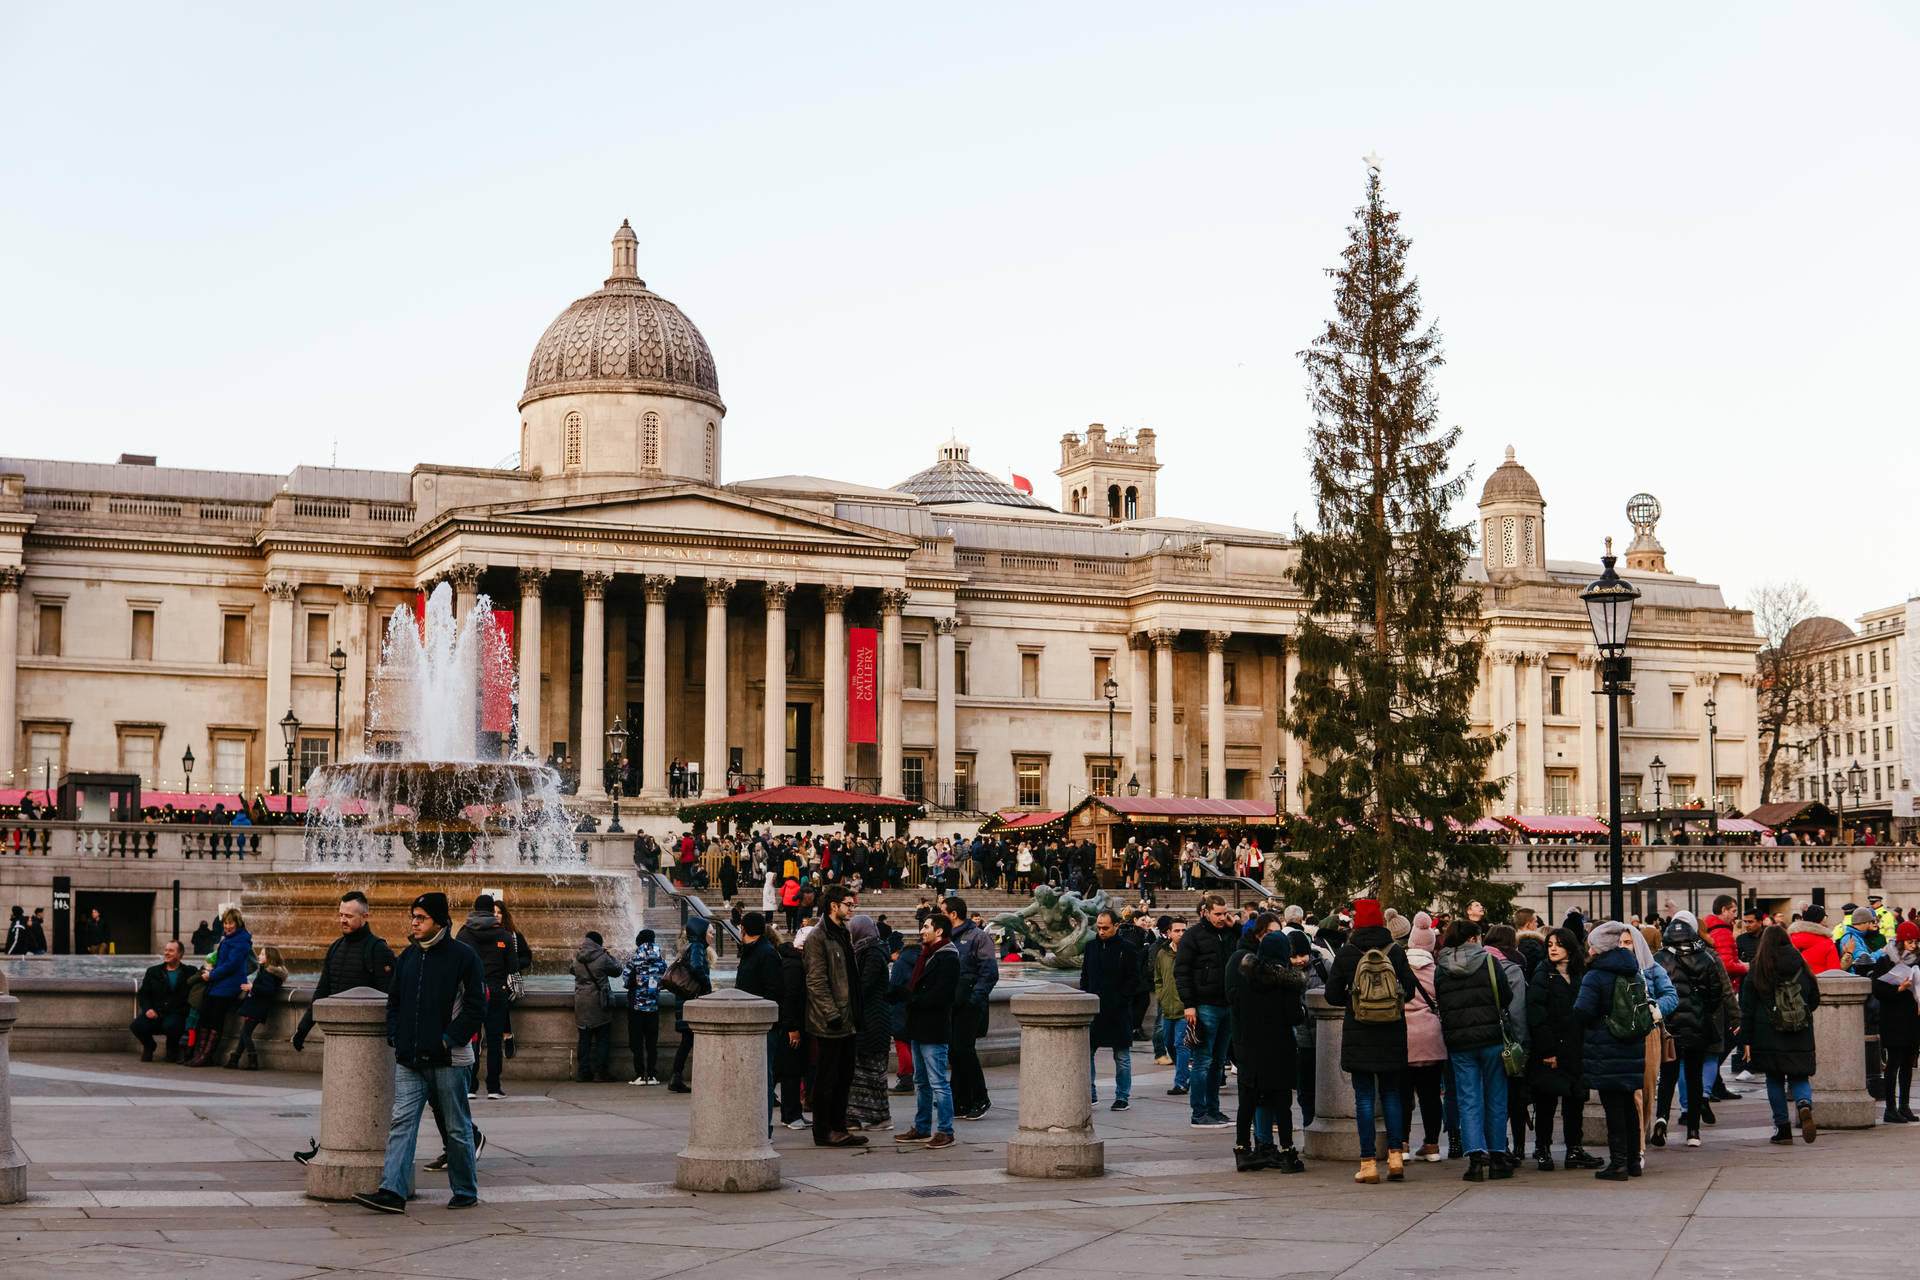 National Gallery On Trafalgar Square